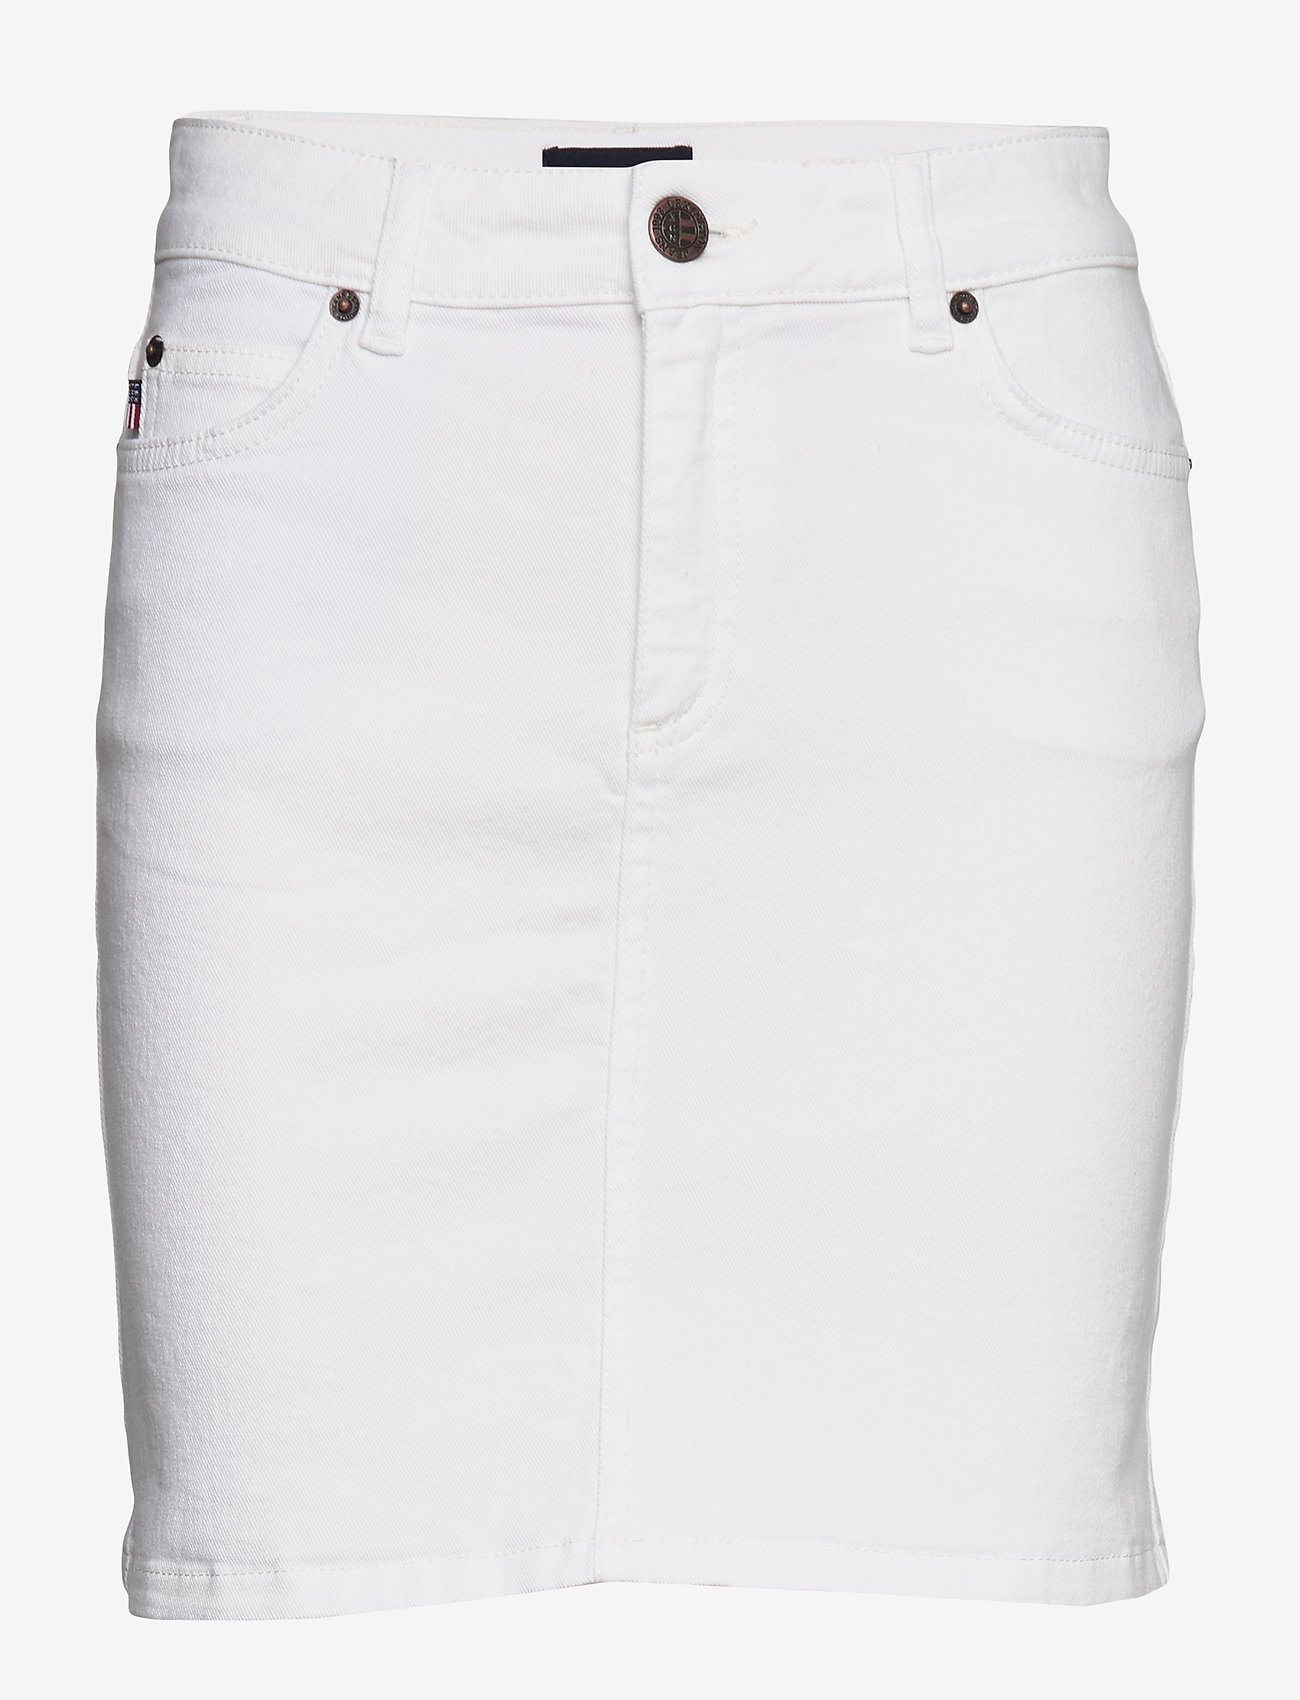 white jean pencil skirt